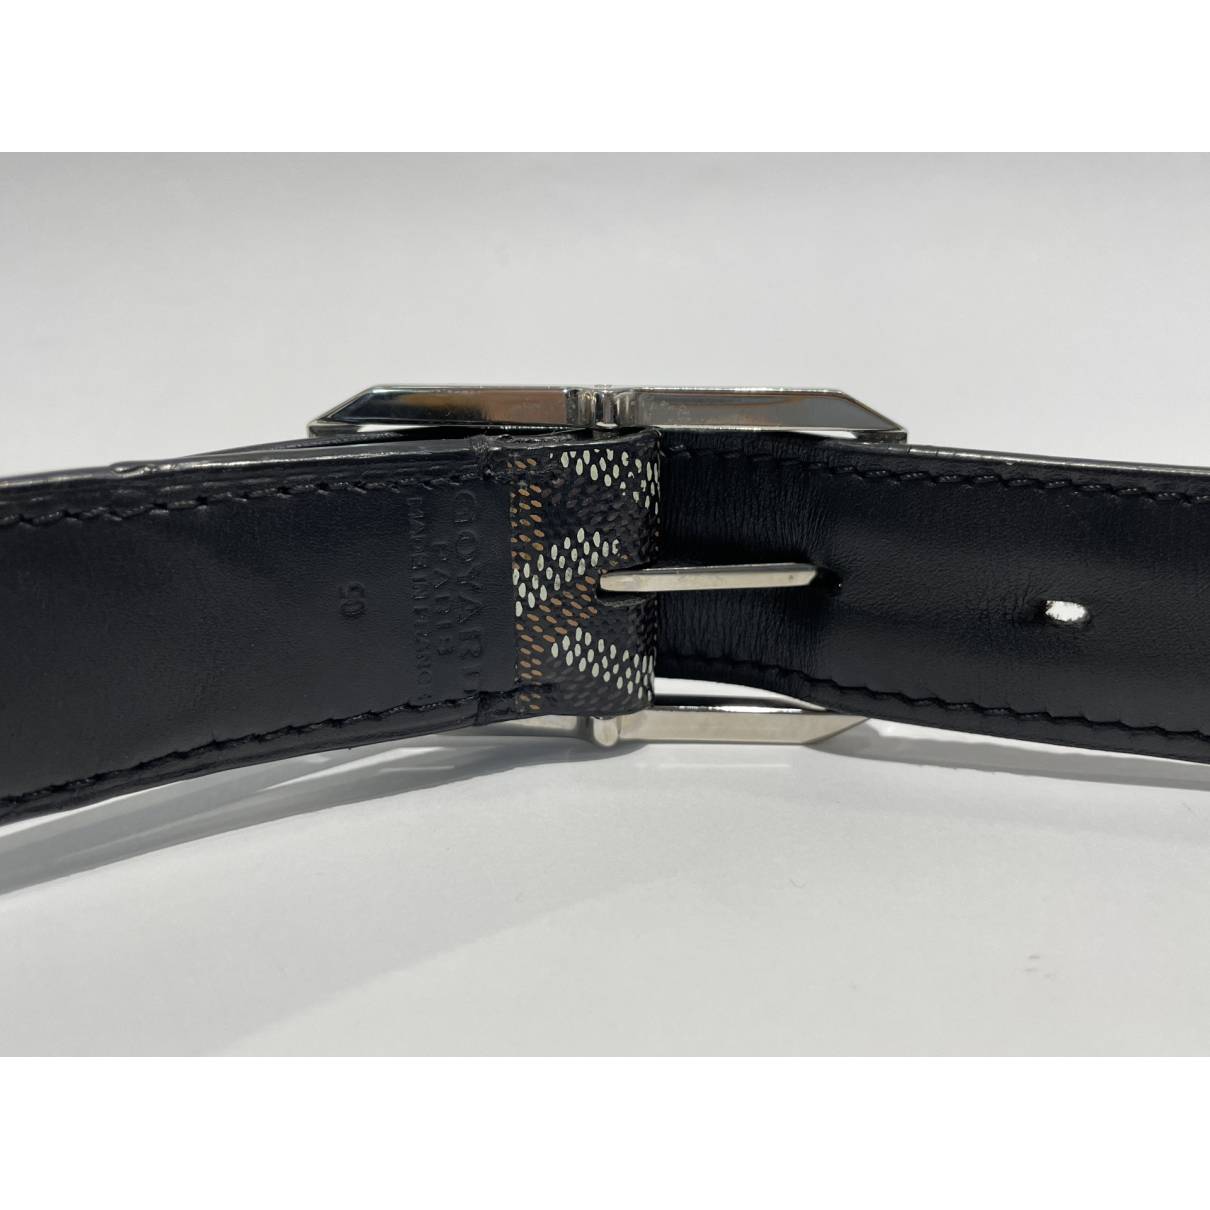 Leather belt Goyard Black size 90 cm in Leather - 27822125